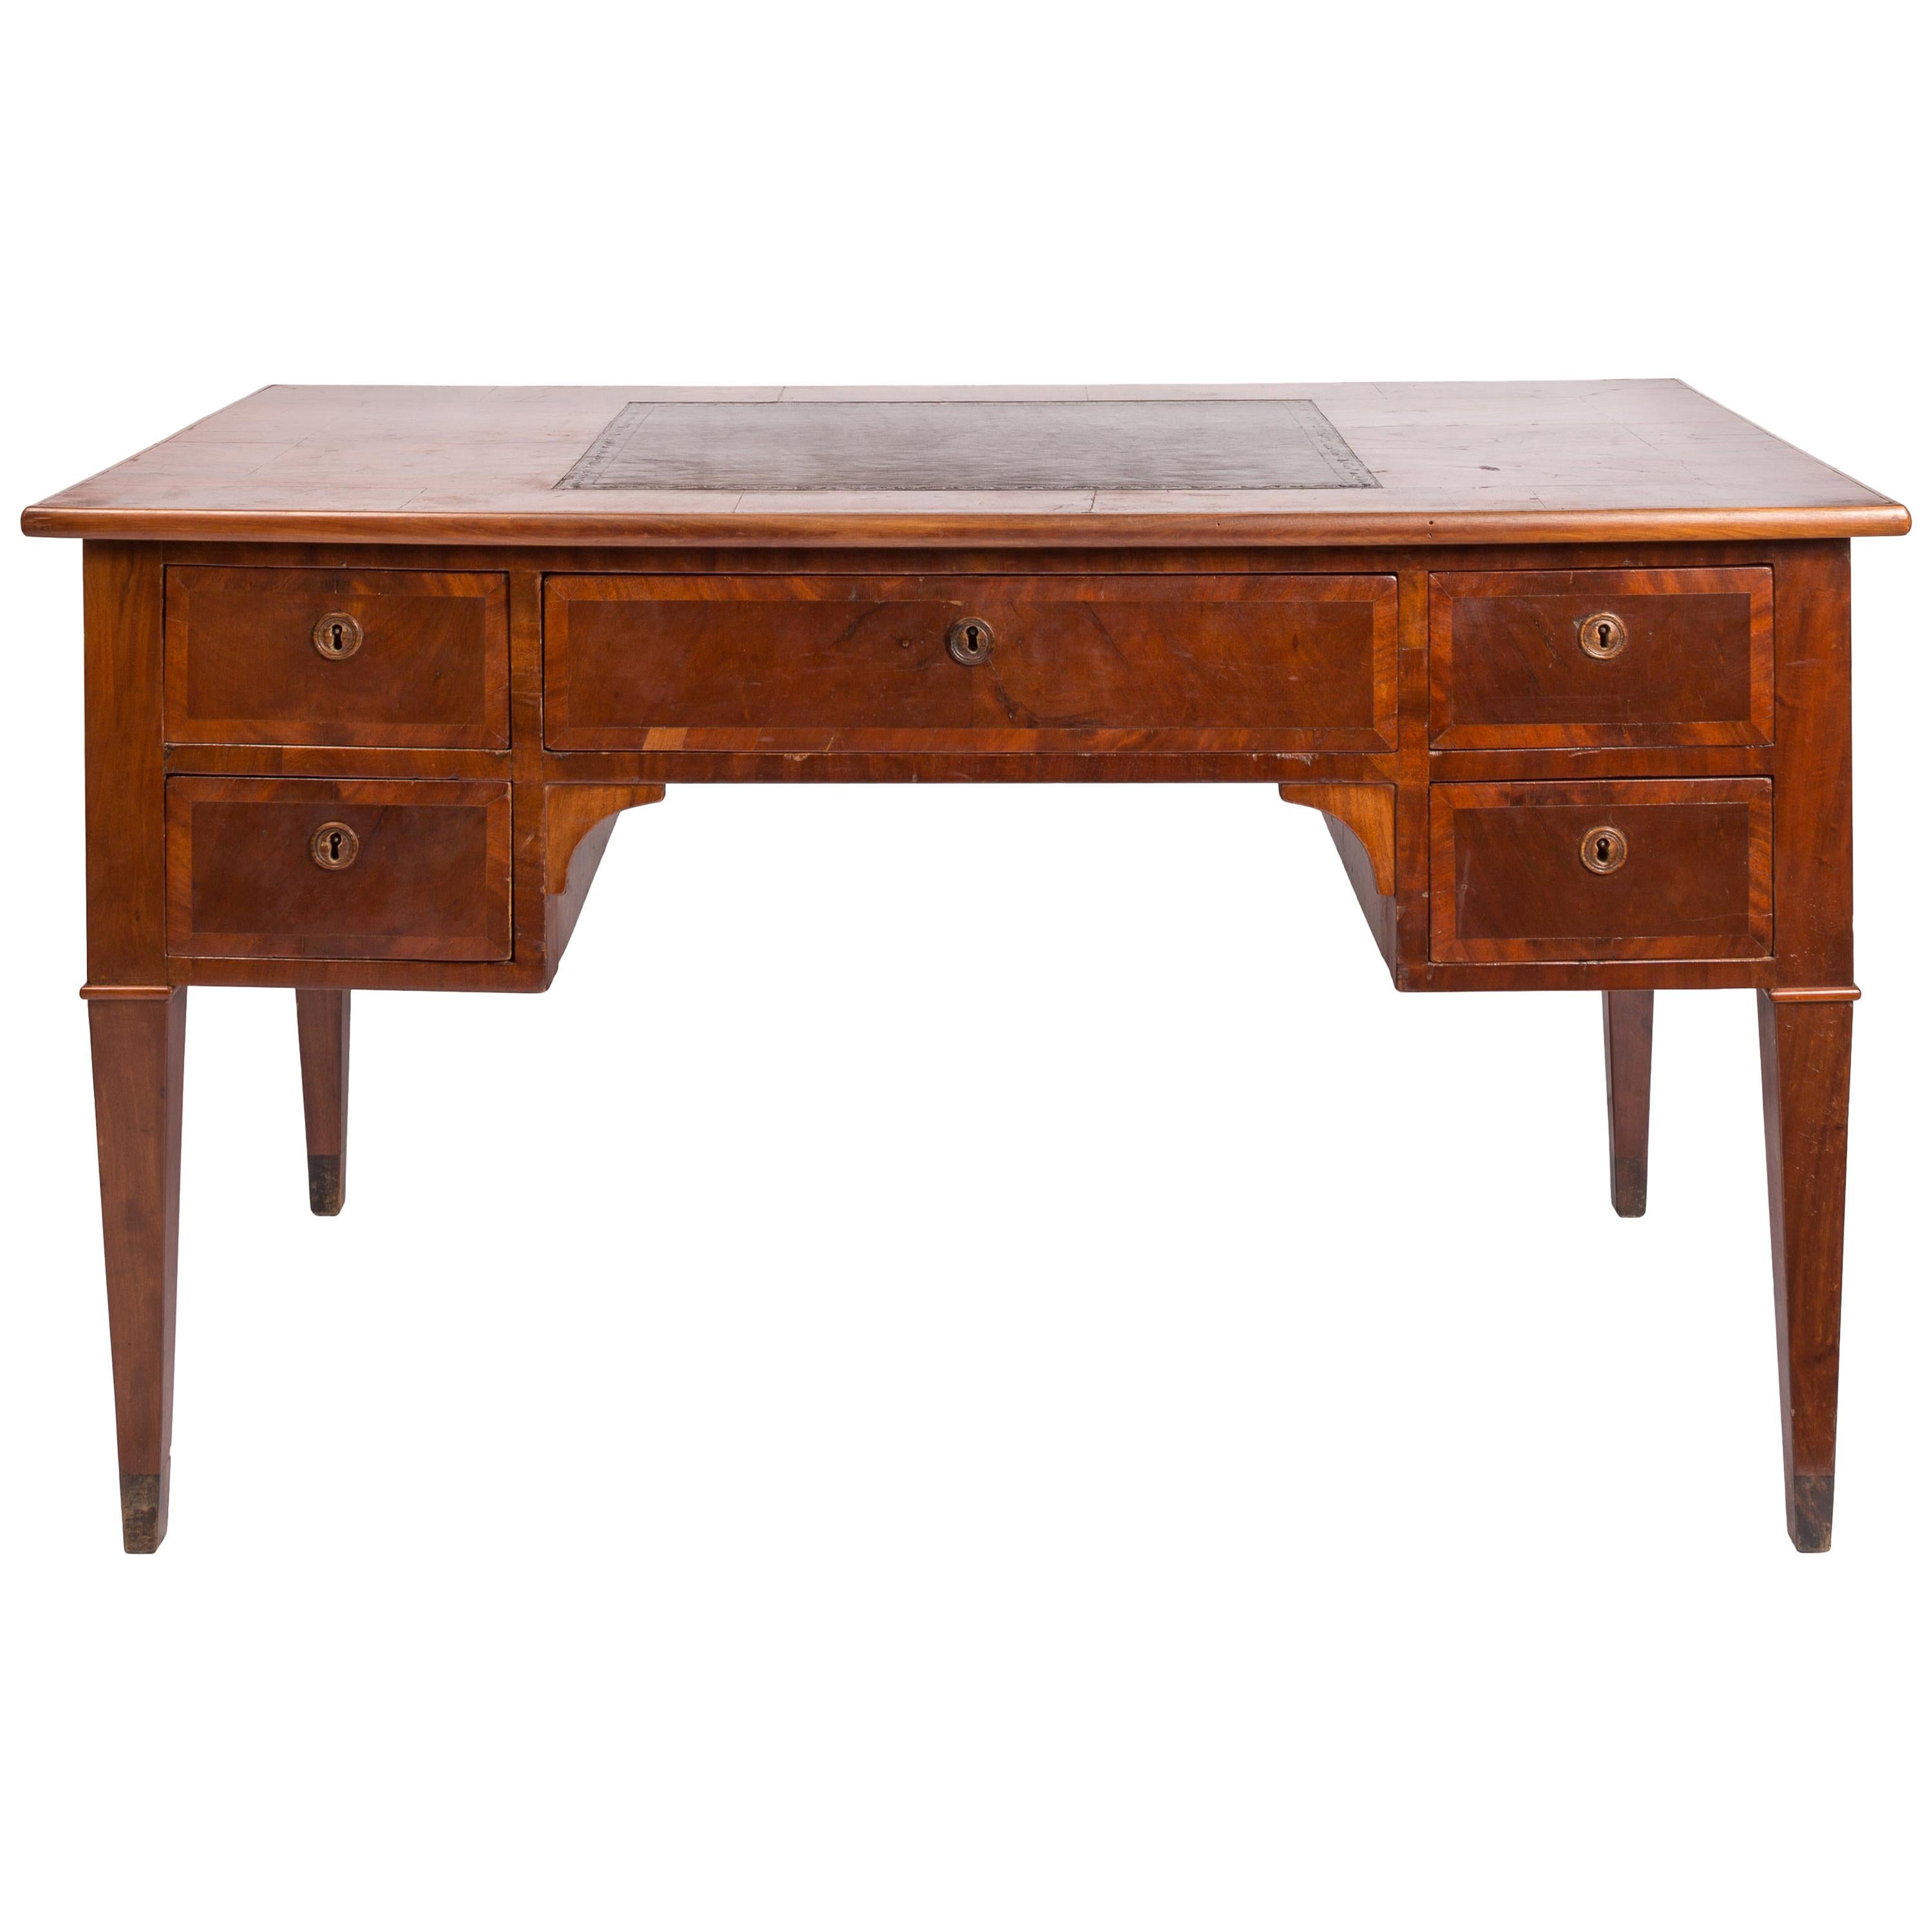 19th Century English Writing Desk, Partner Style, Leather Top, Wood Grain Veneer